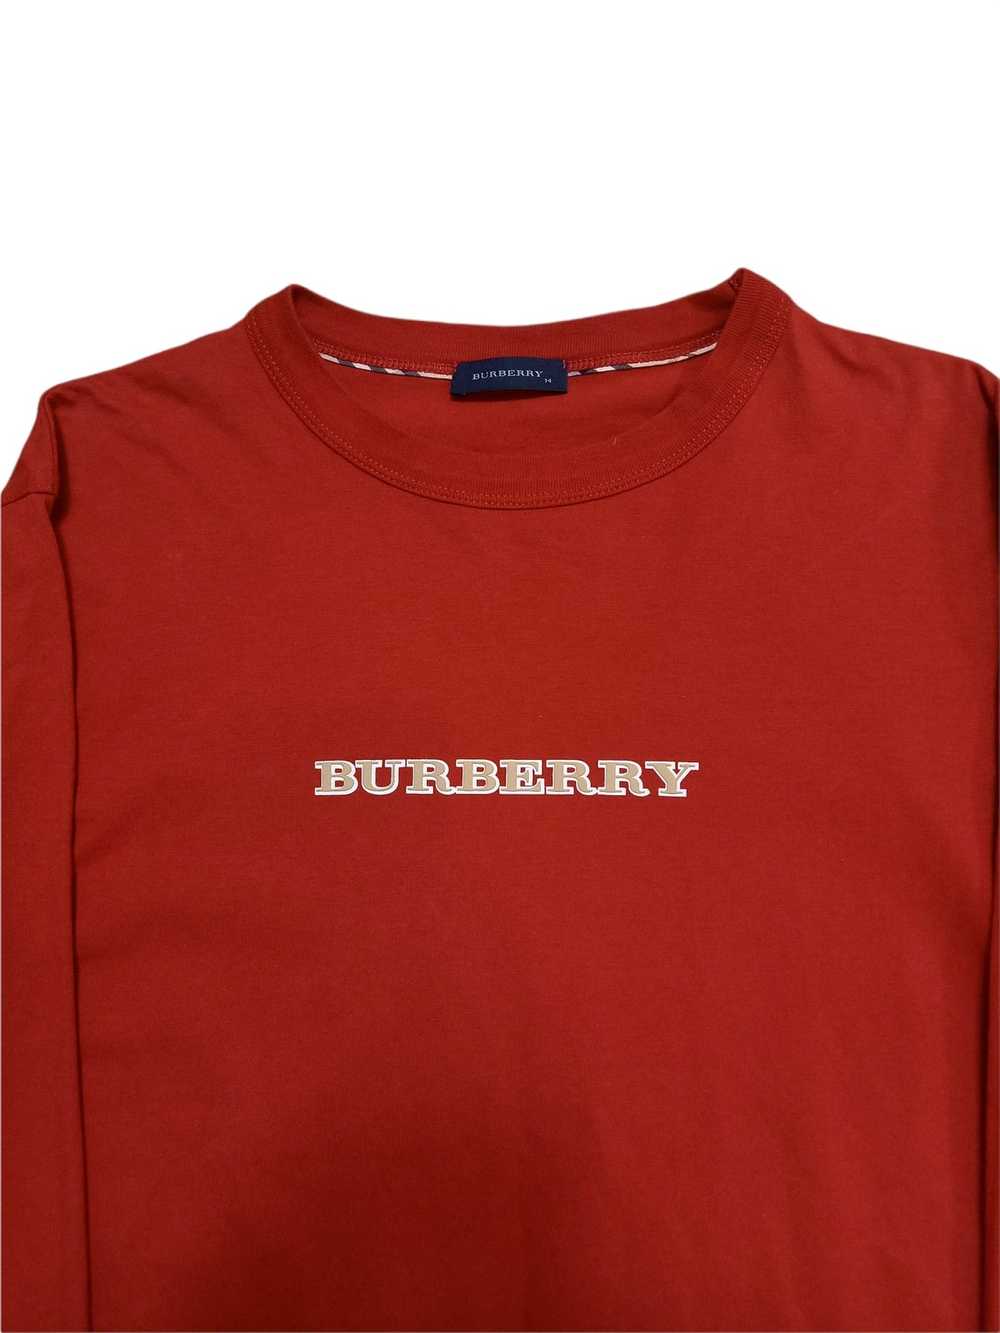 Burberry Burberry Longsleeve - image 3